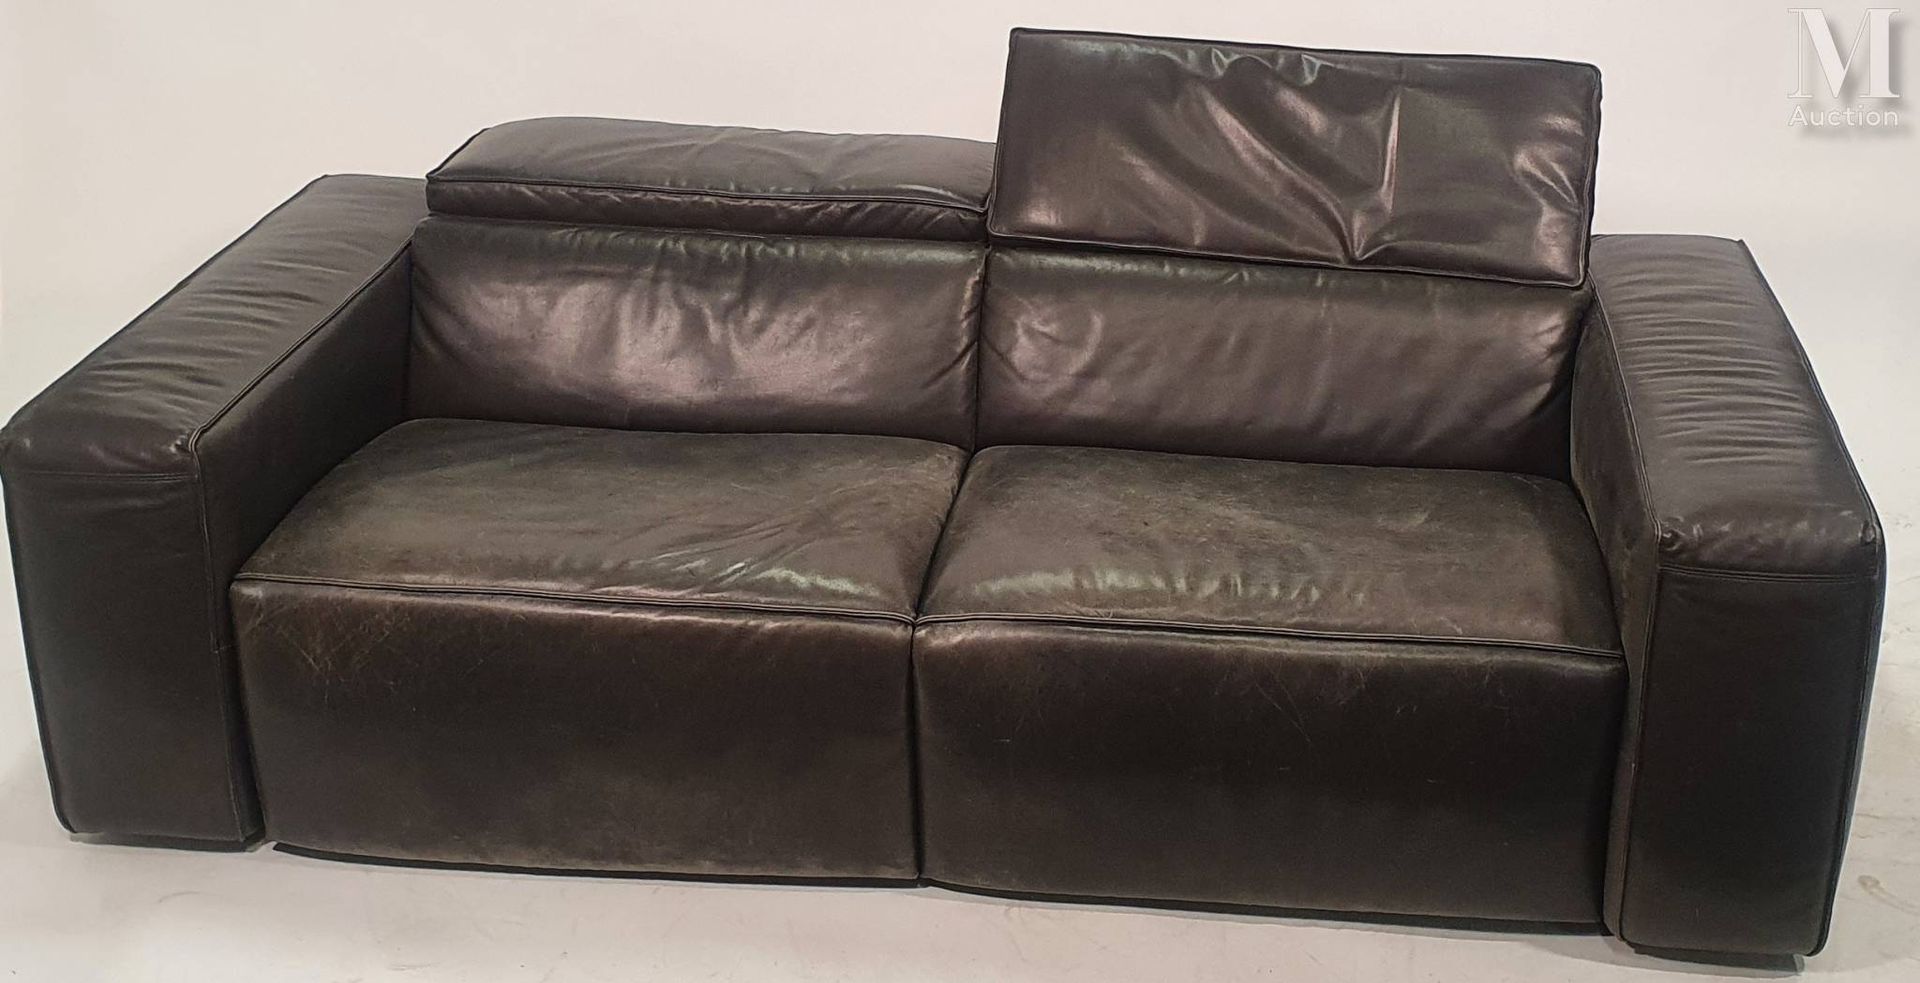 TRAVAIL ITALIEN 木质框架的沙发，用黑色皮革覆盖。可调节头枕。

86 x 212 x 103厘米

(磨损)